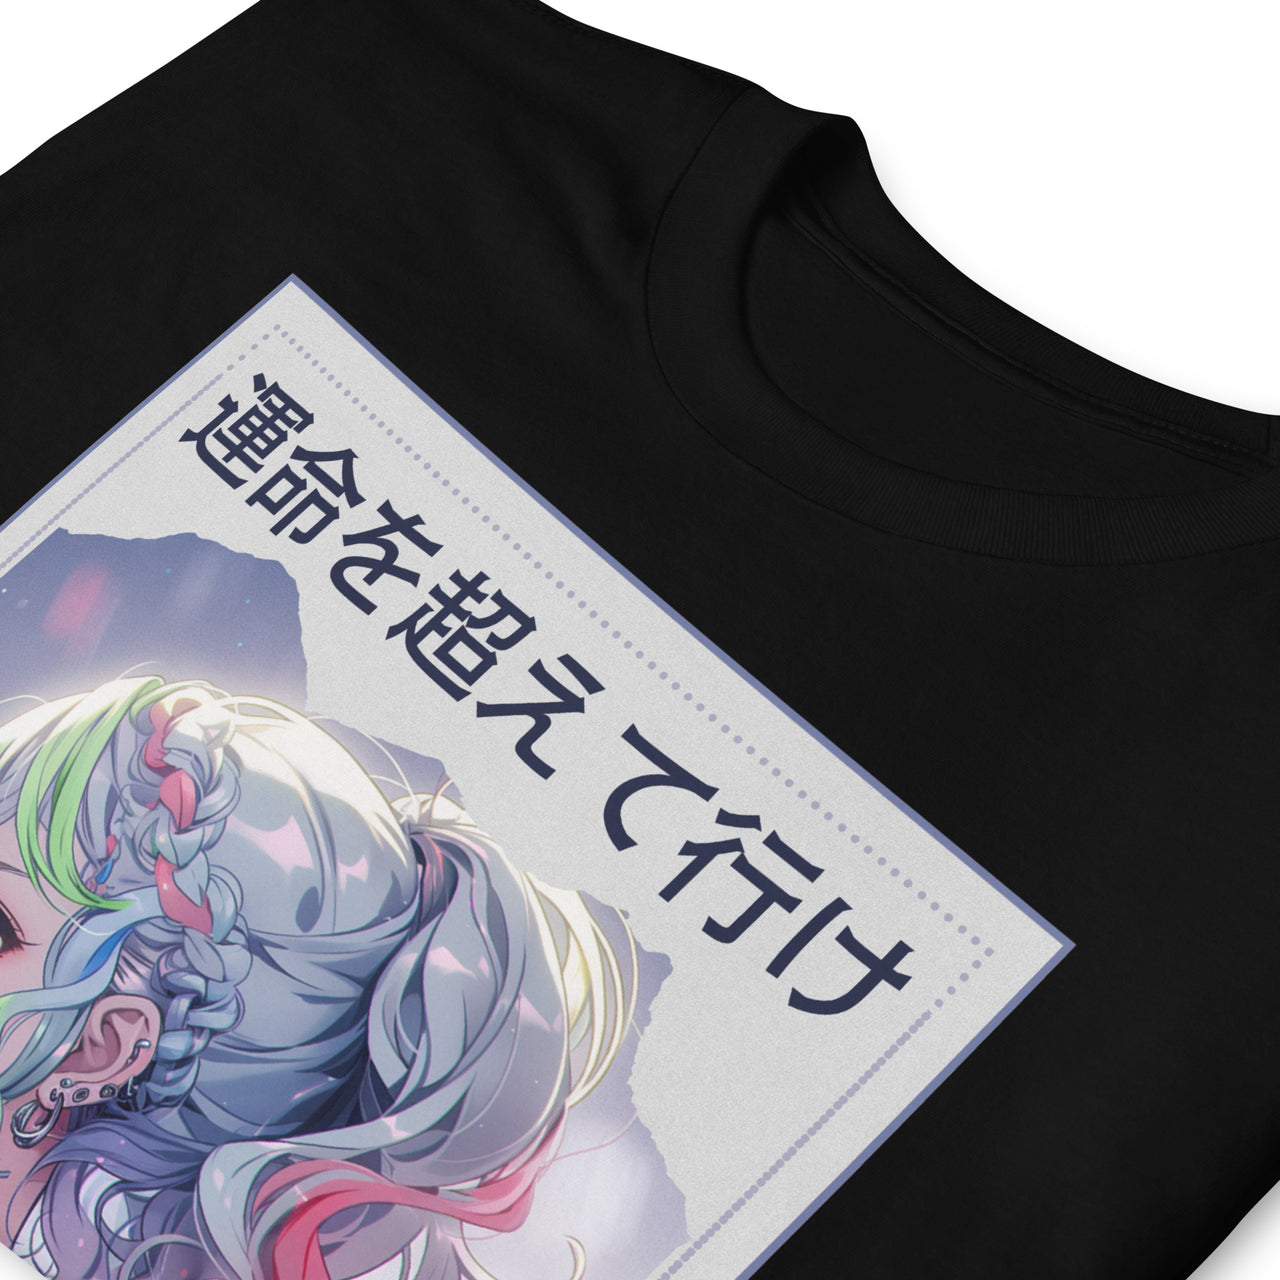 Anime Eyes Girl Go Beyond Fate Japan T-Shirt